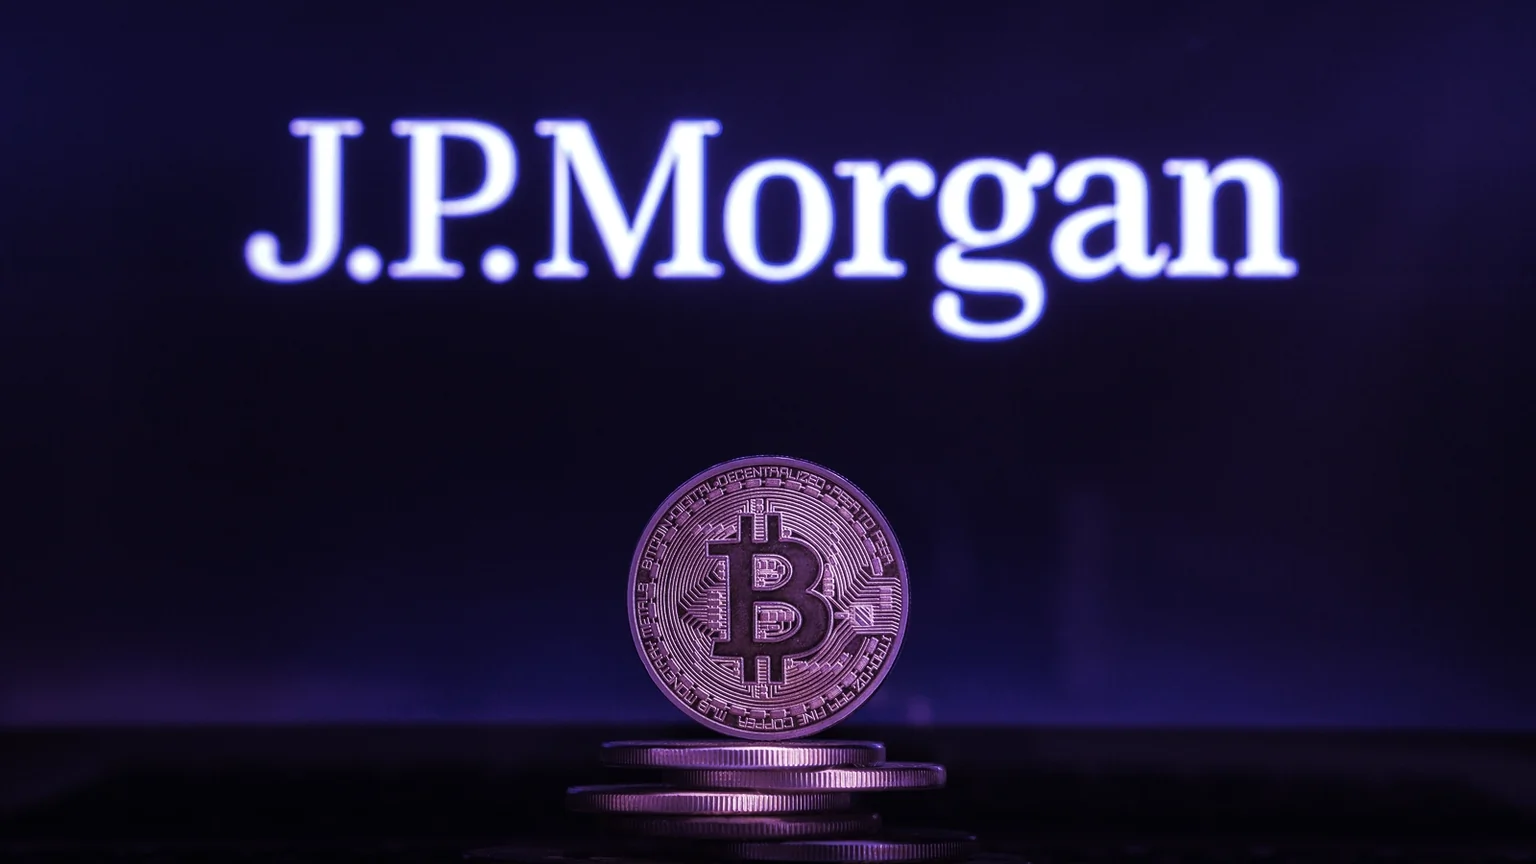 JP Morgan and Bitcoin. Image: Shutterstock